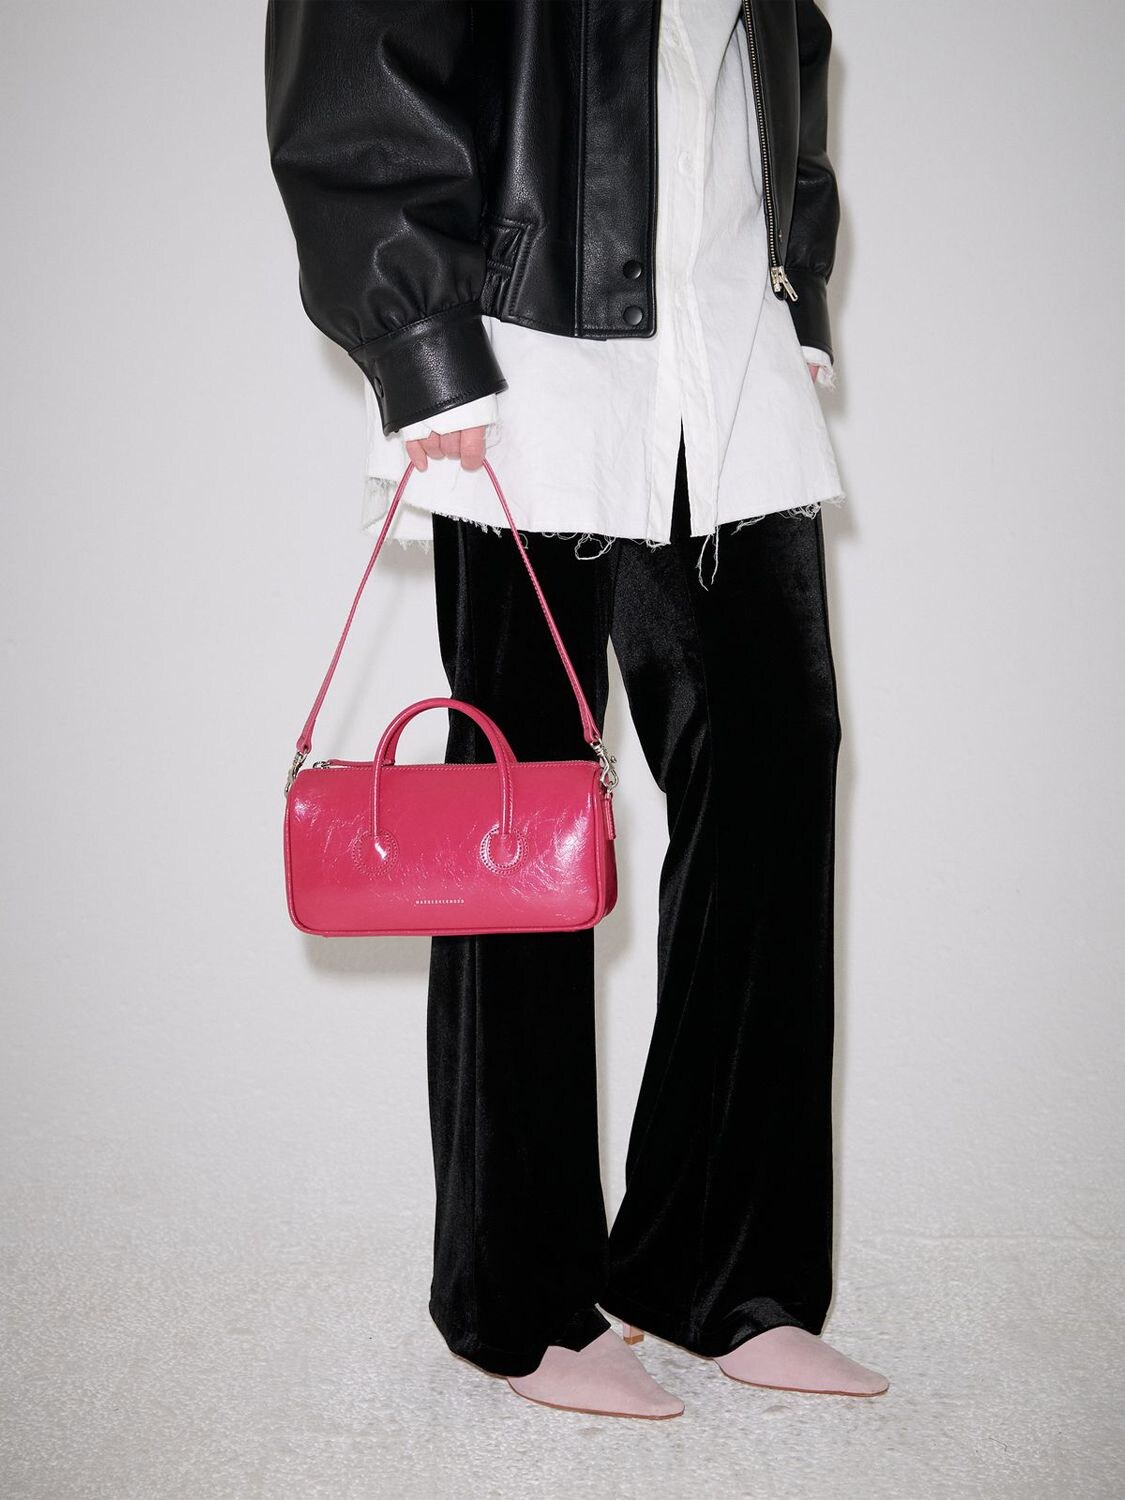 Marge Sherwood | Women Hobo Leather Shoulder Bag Berry Pink Unique